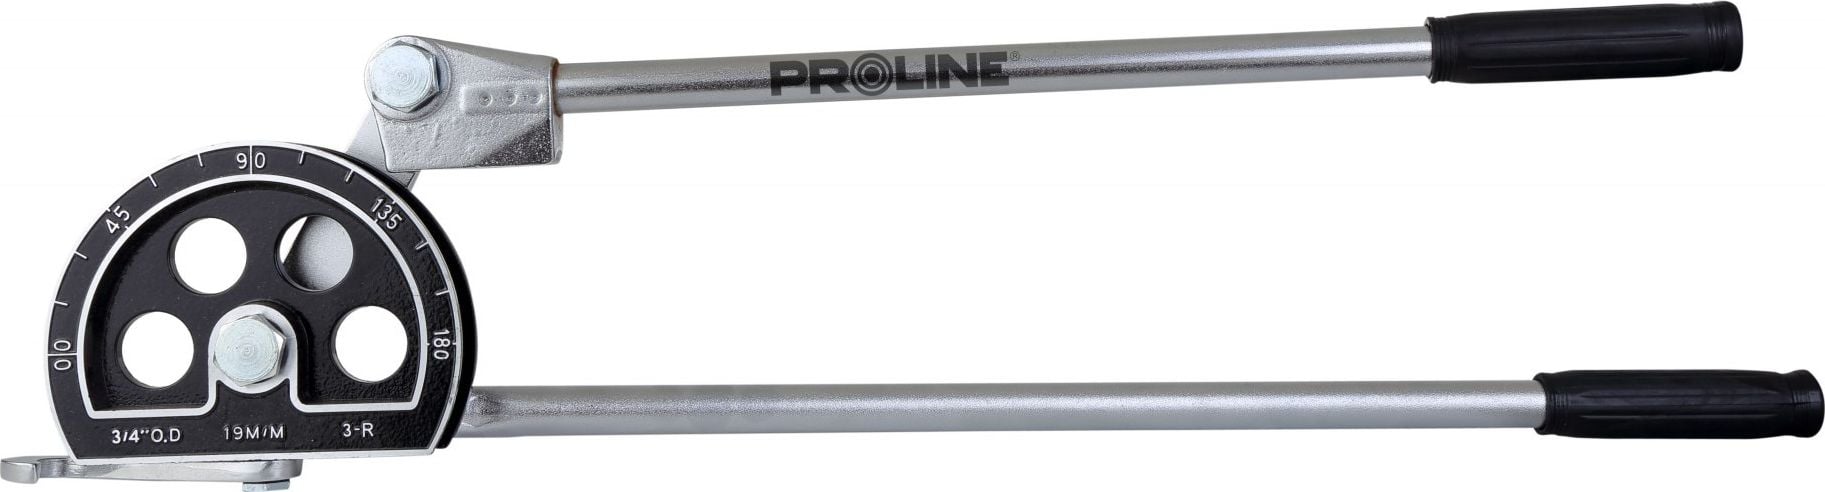 PRO-Line AL PIPE BENDER CU 3/4'' 19MM PROLINE 67217 PROLINE